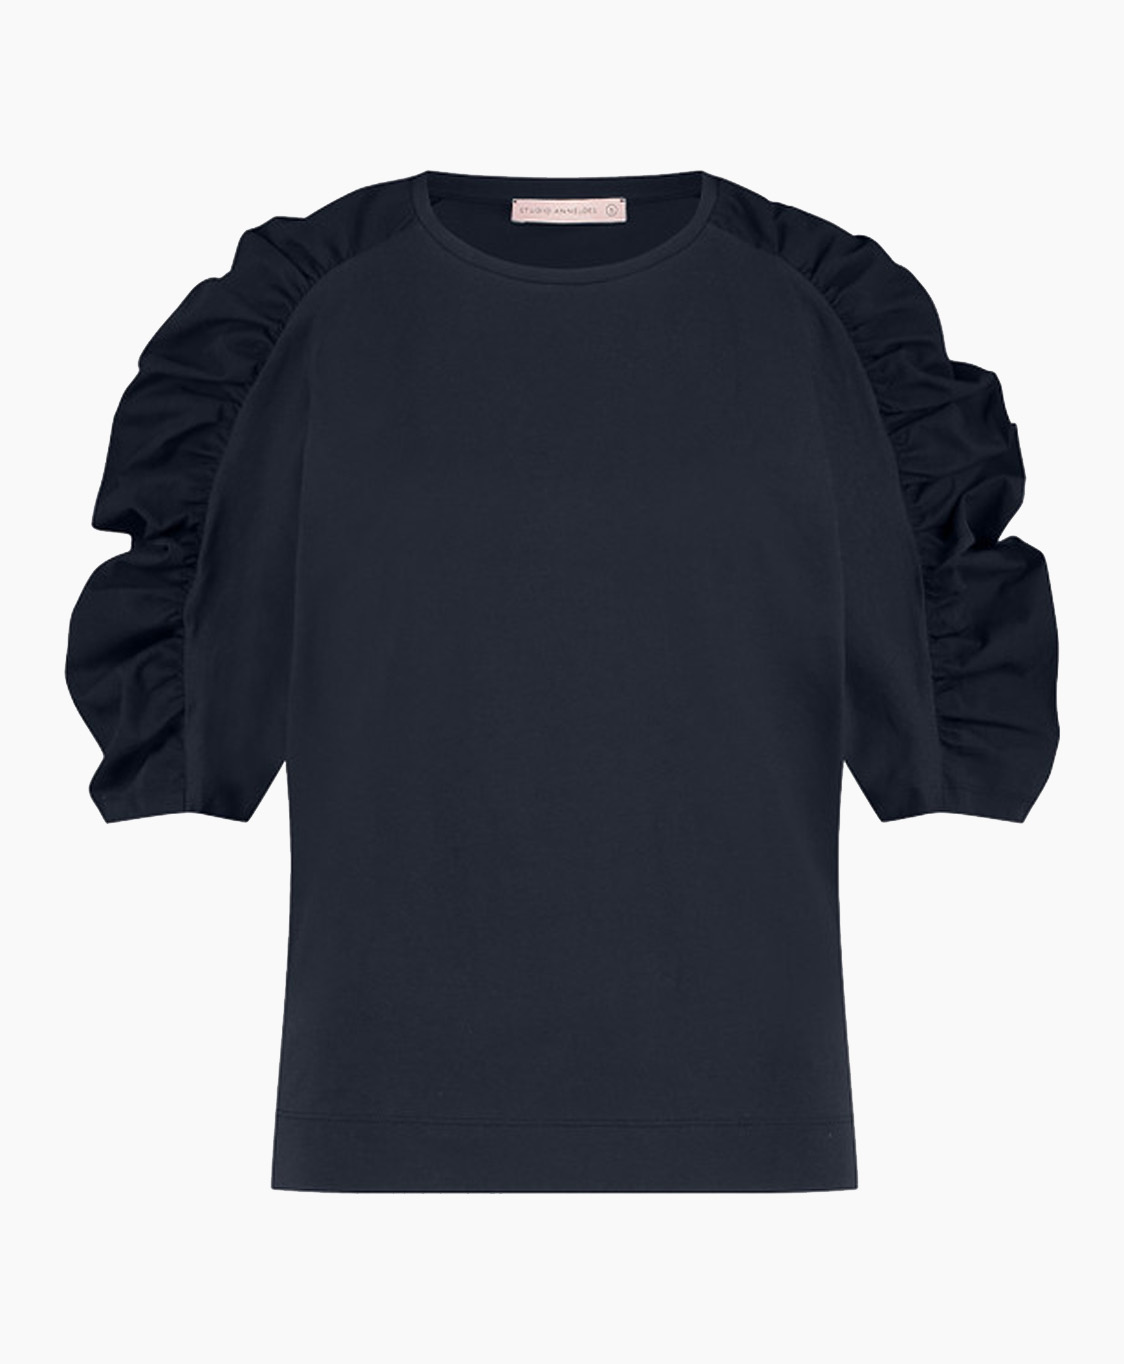 Studio Anneloes Top & T-shirt Lotus Shirt Donker Blauw